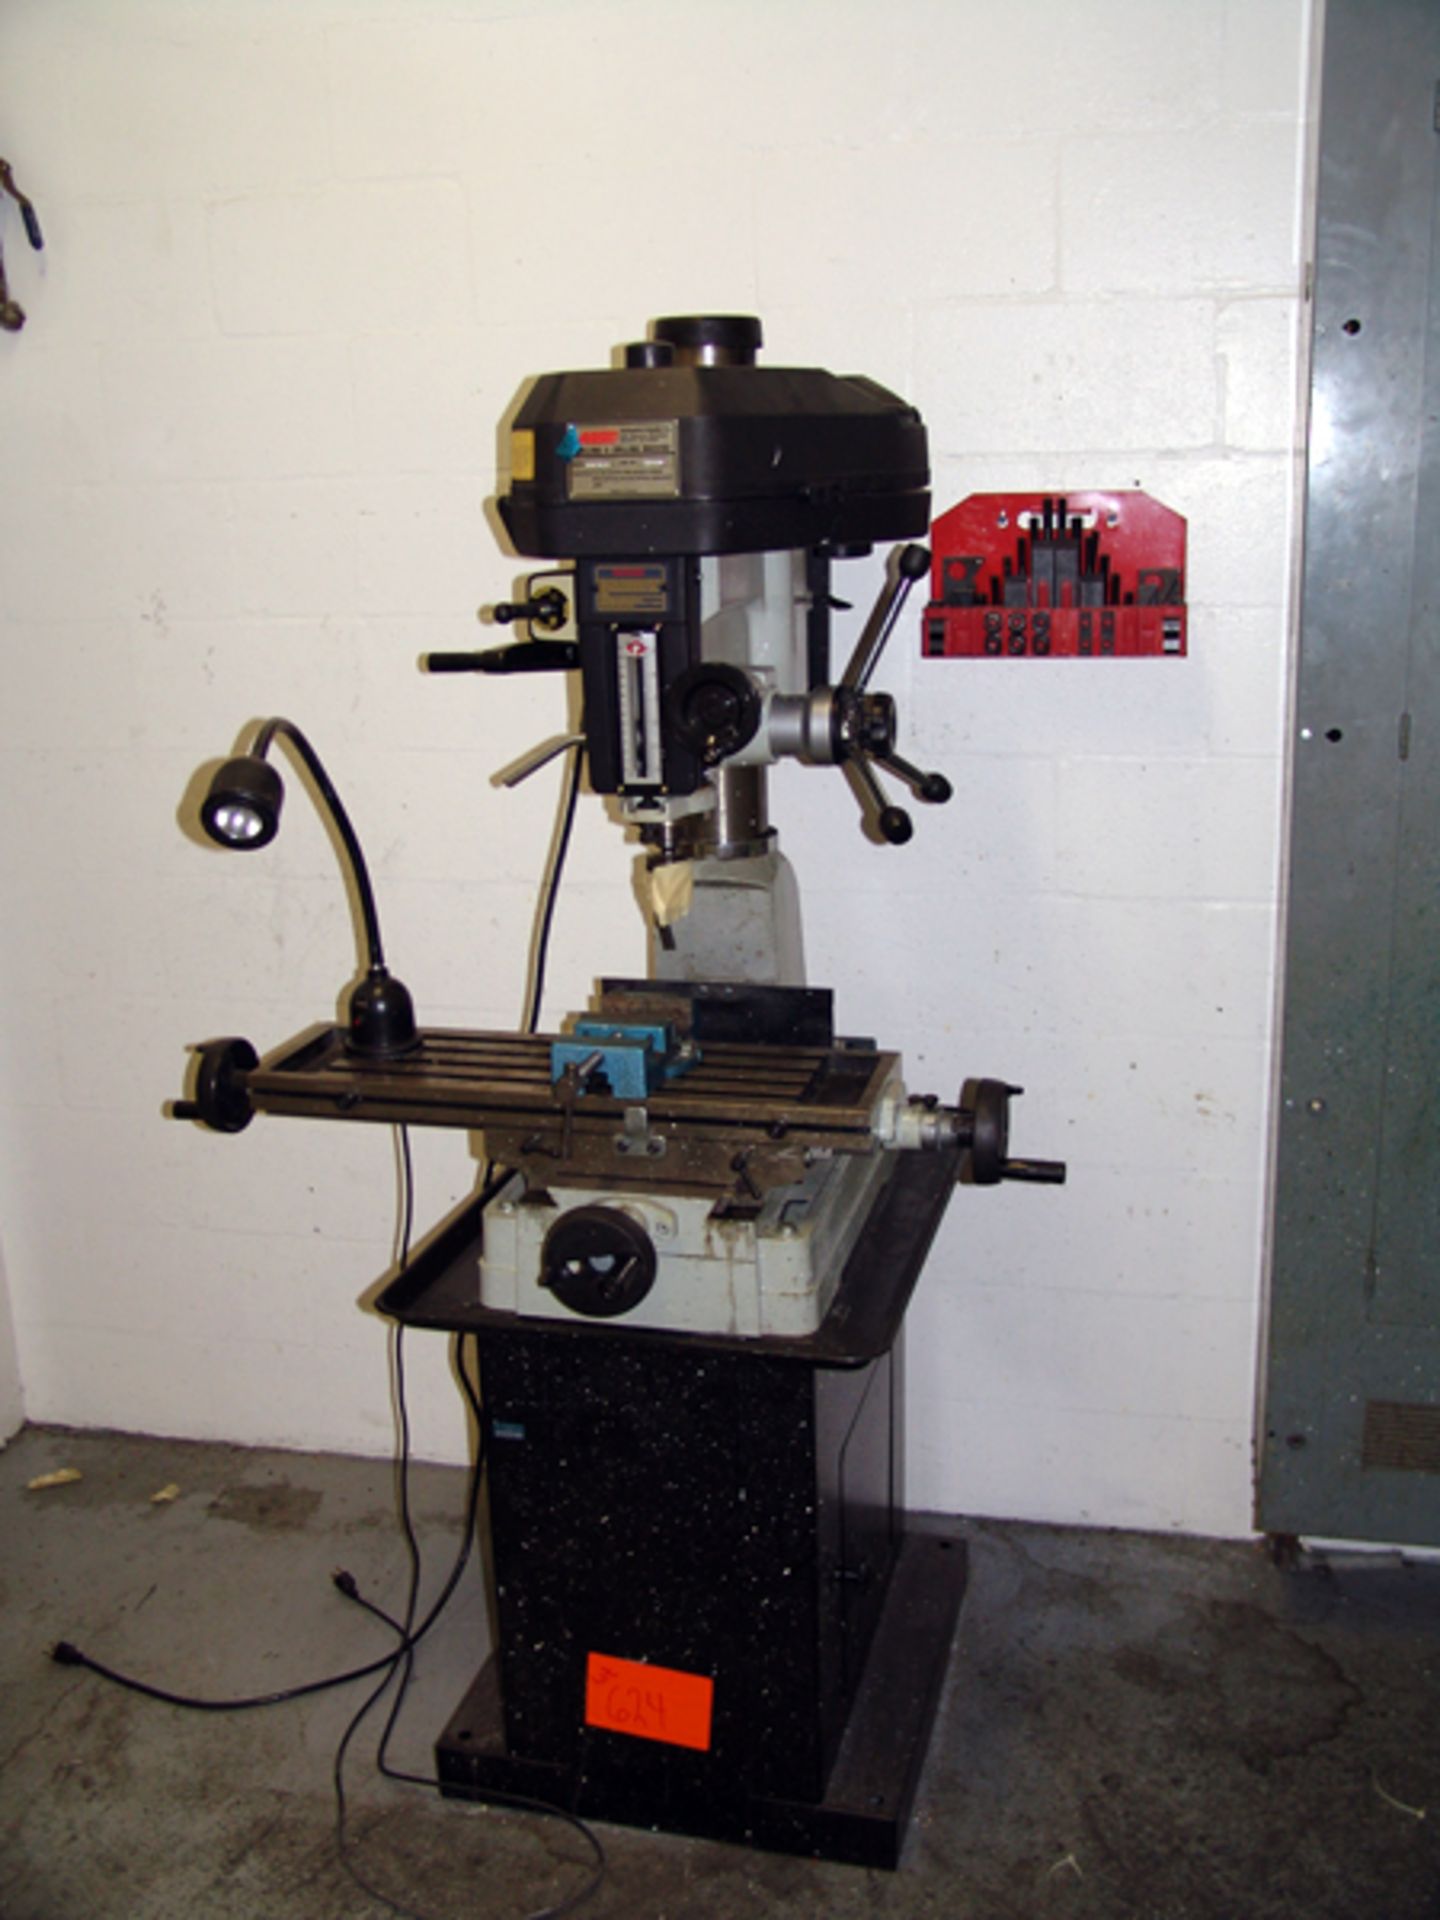 MSC Milling and Drilling Machine, Model 00685420, s/n 635120 on Metal Platform - Image 2 of 2